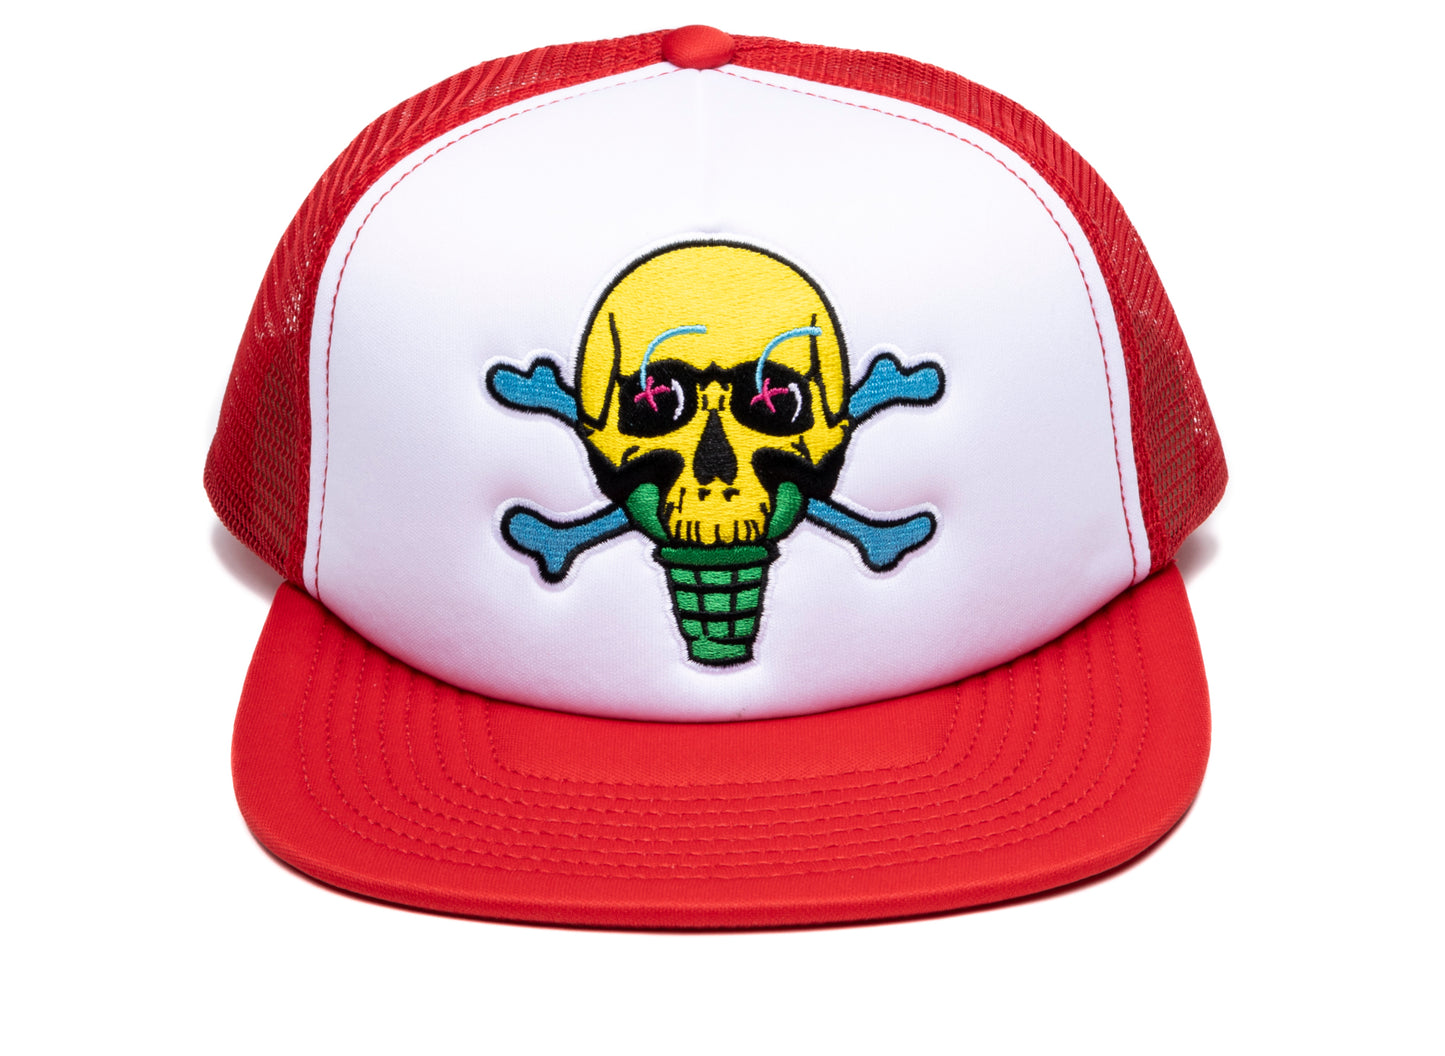 Ice Cream Skully Trucker Hat in Red